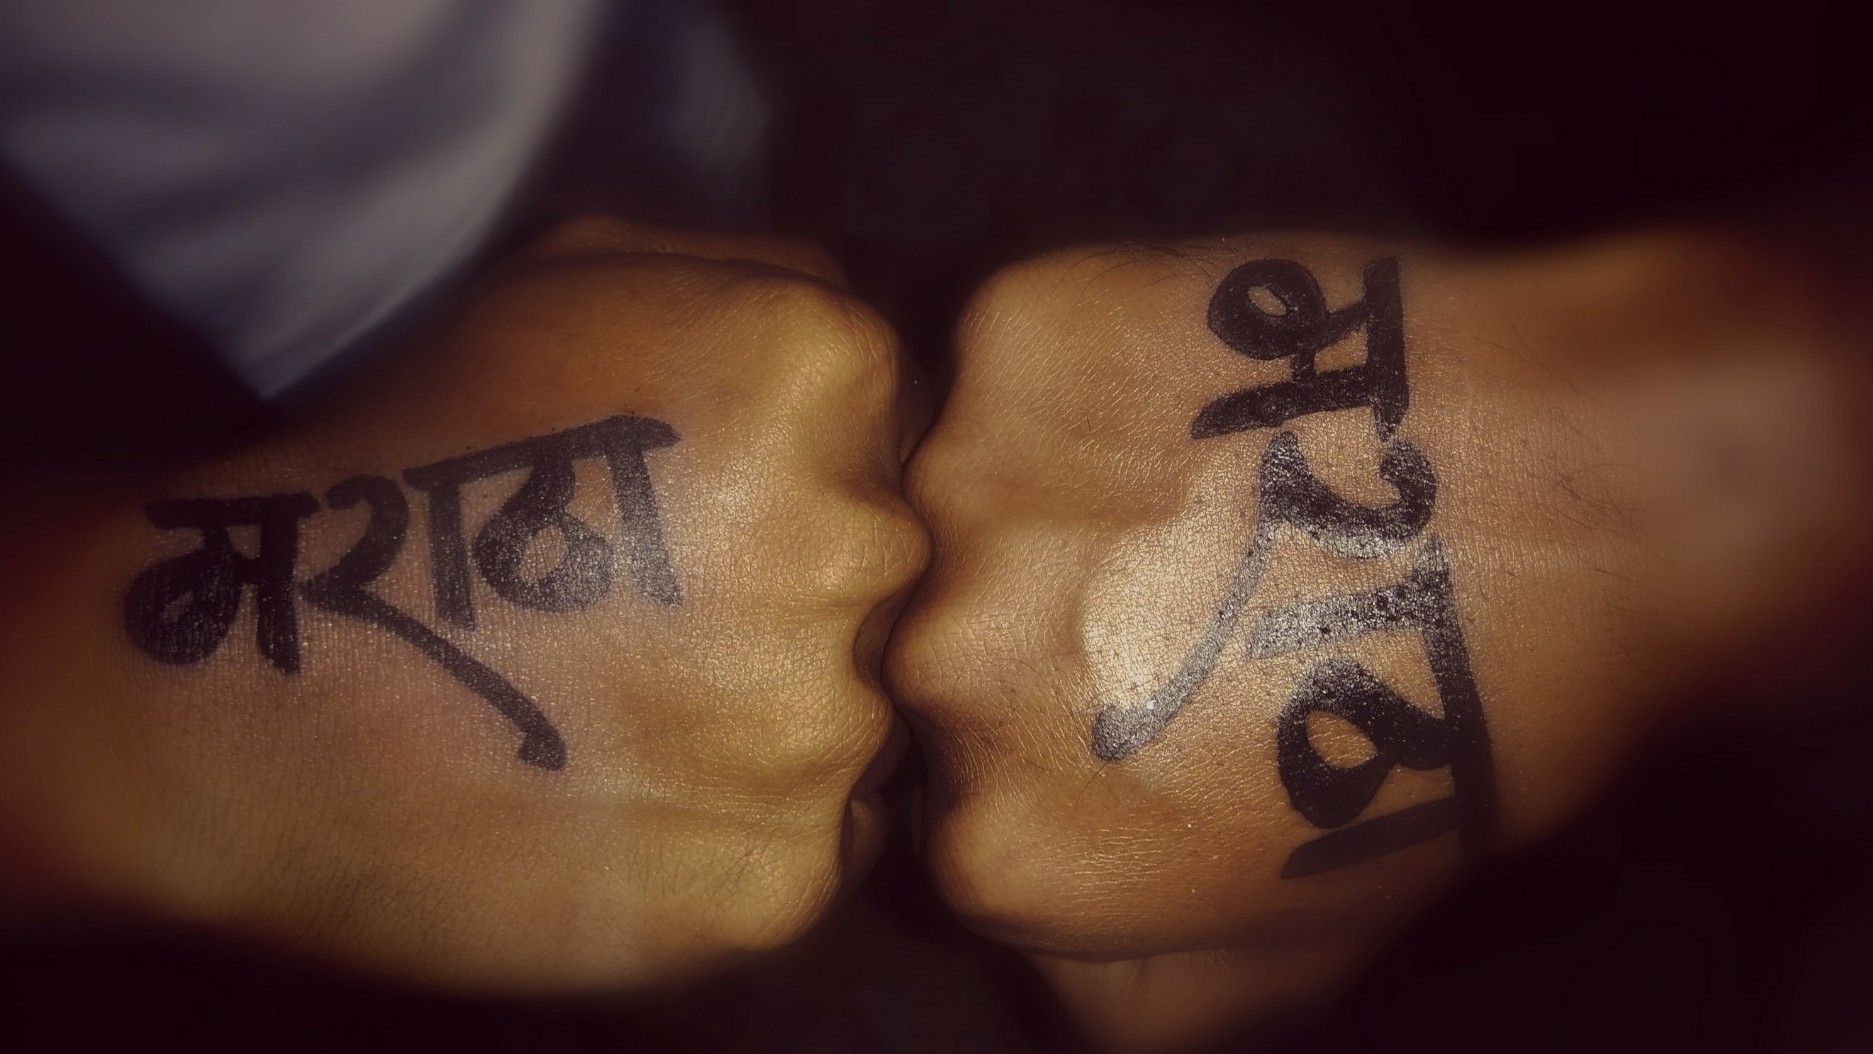 Marathi calligraphy tattoo  Wrist tattoos for guys Hand tattoos for guys  Calligraphy tattoo